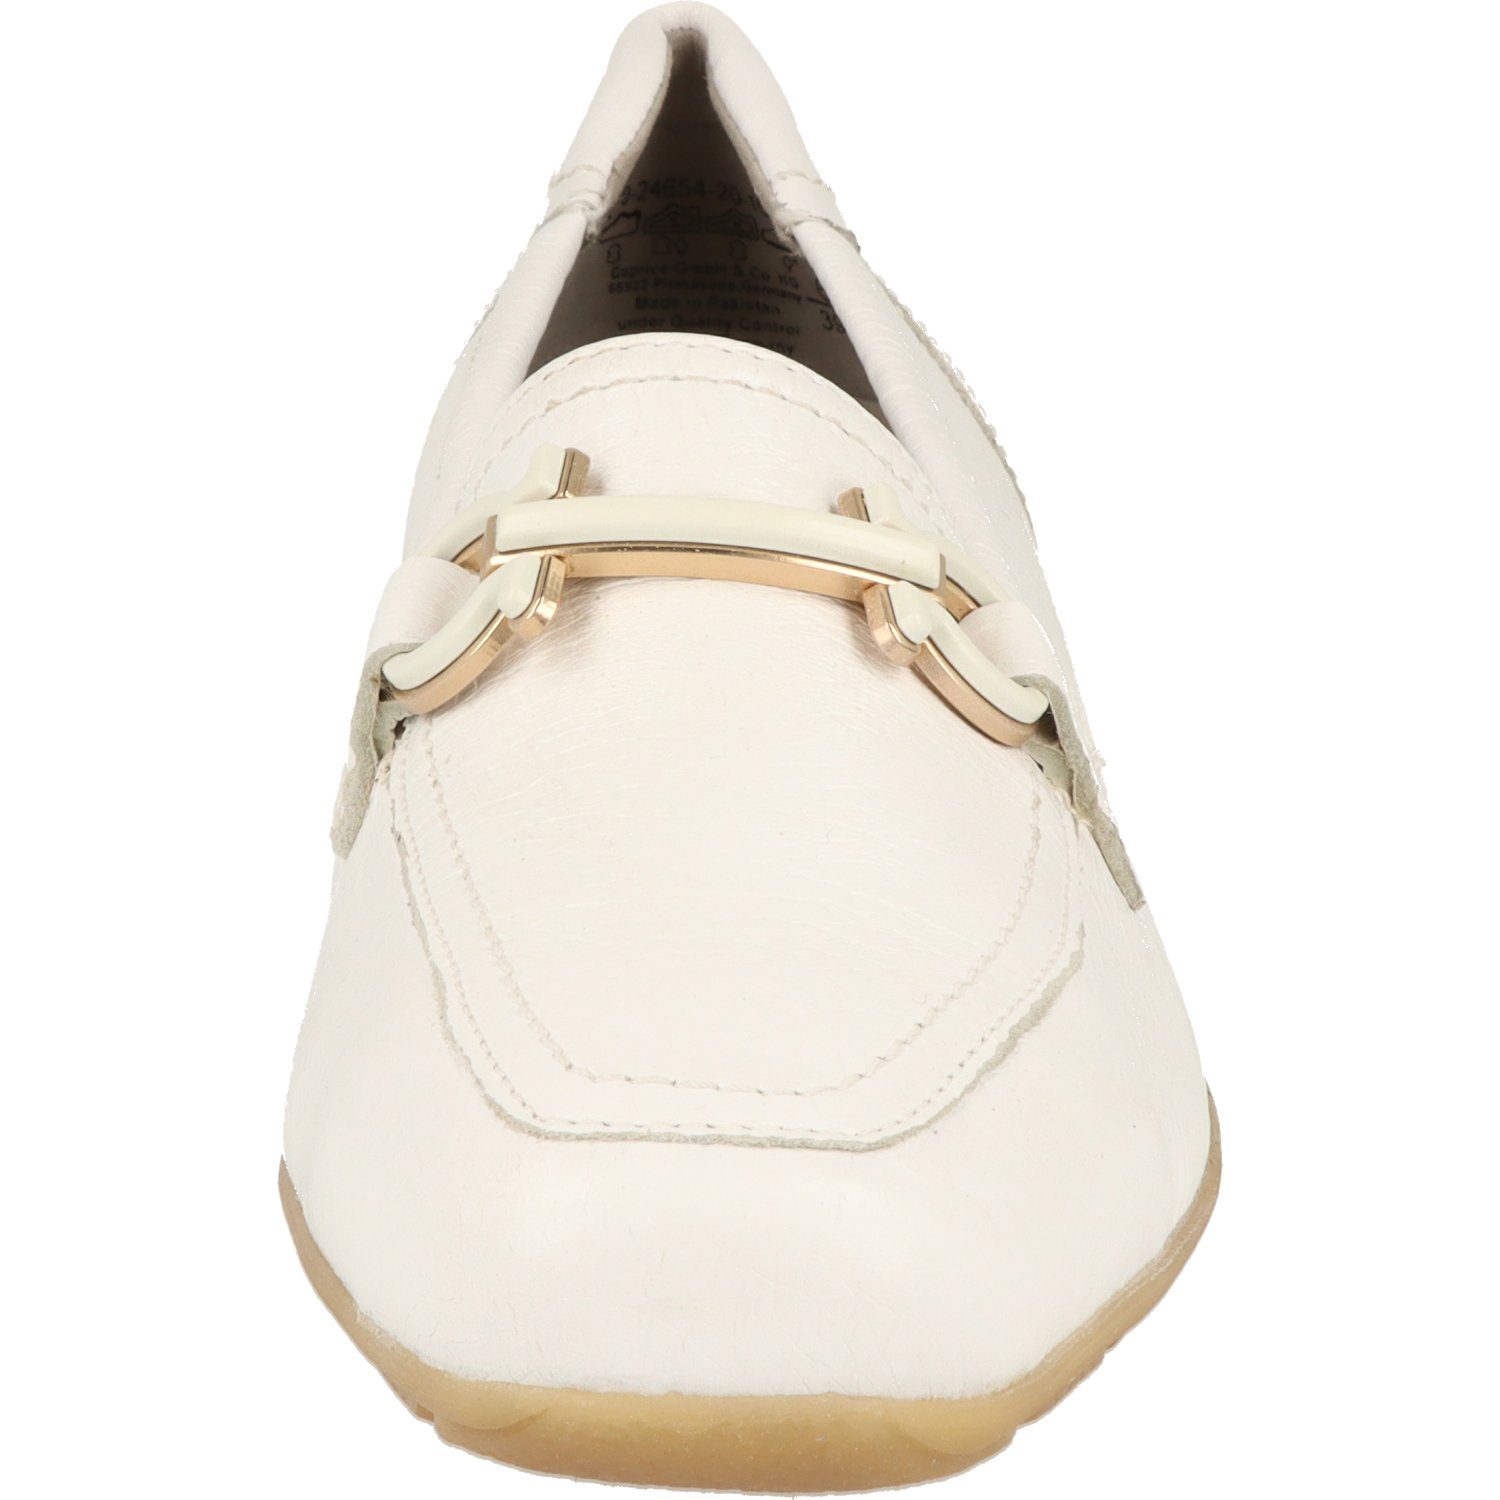 Slipper Damen Caprice 105 White Schuhe stylische 9-24654-20 Comfort Slipper Leder